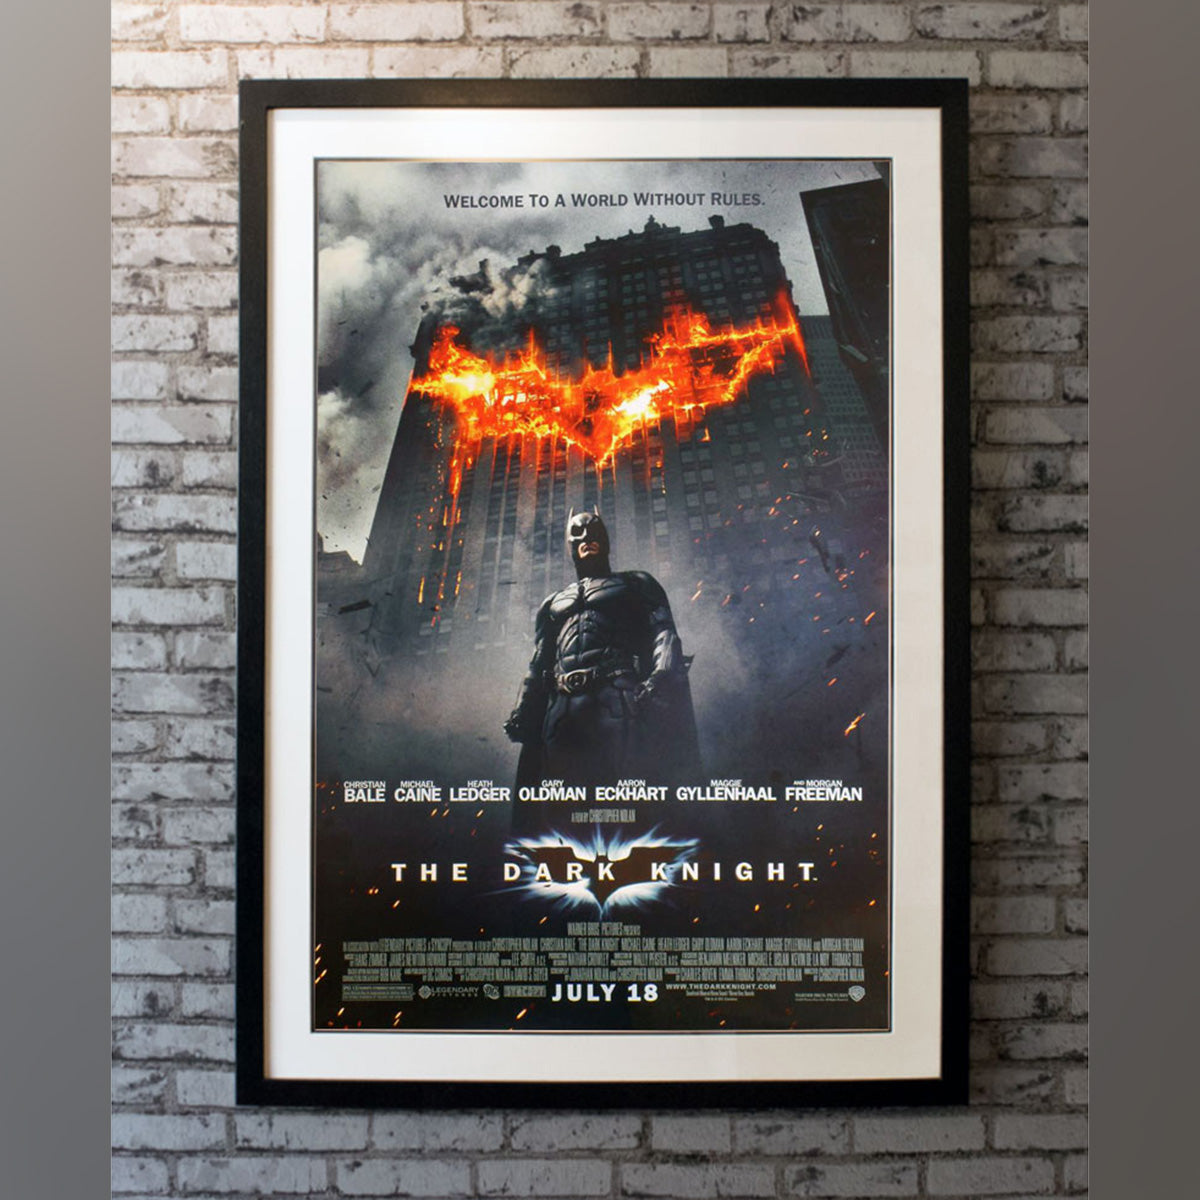 Original Movie Poster of Dark Knight, The (2008)